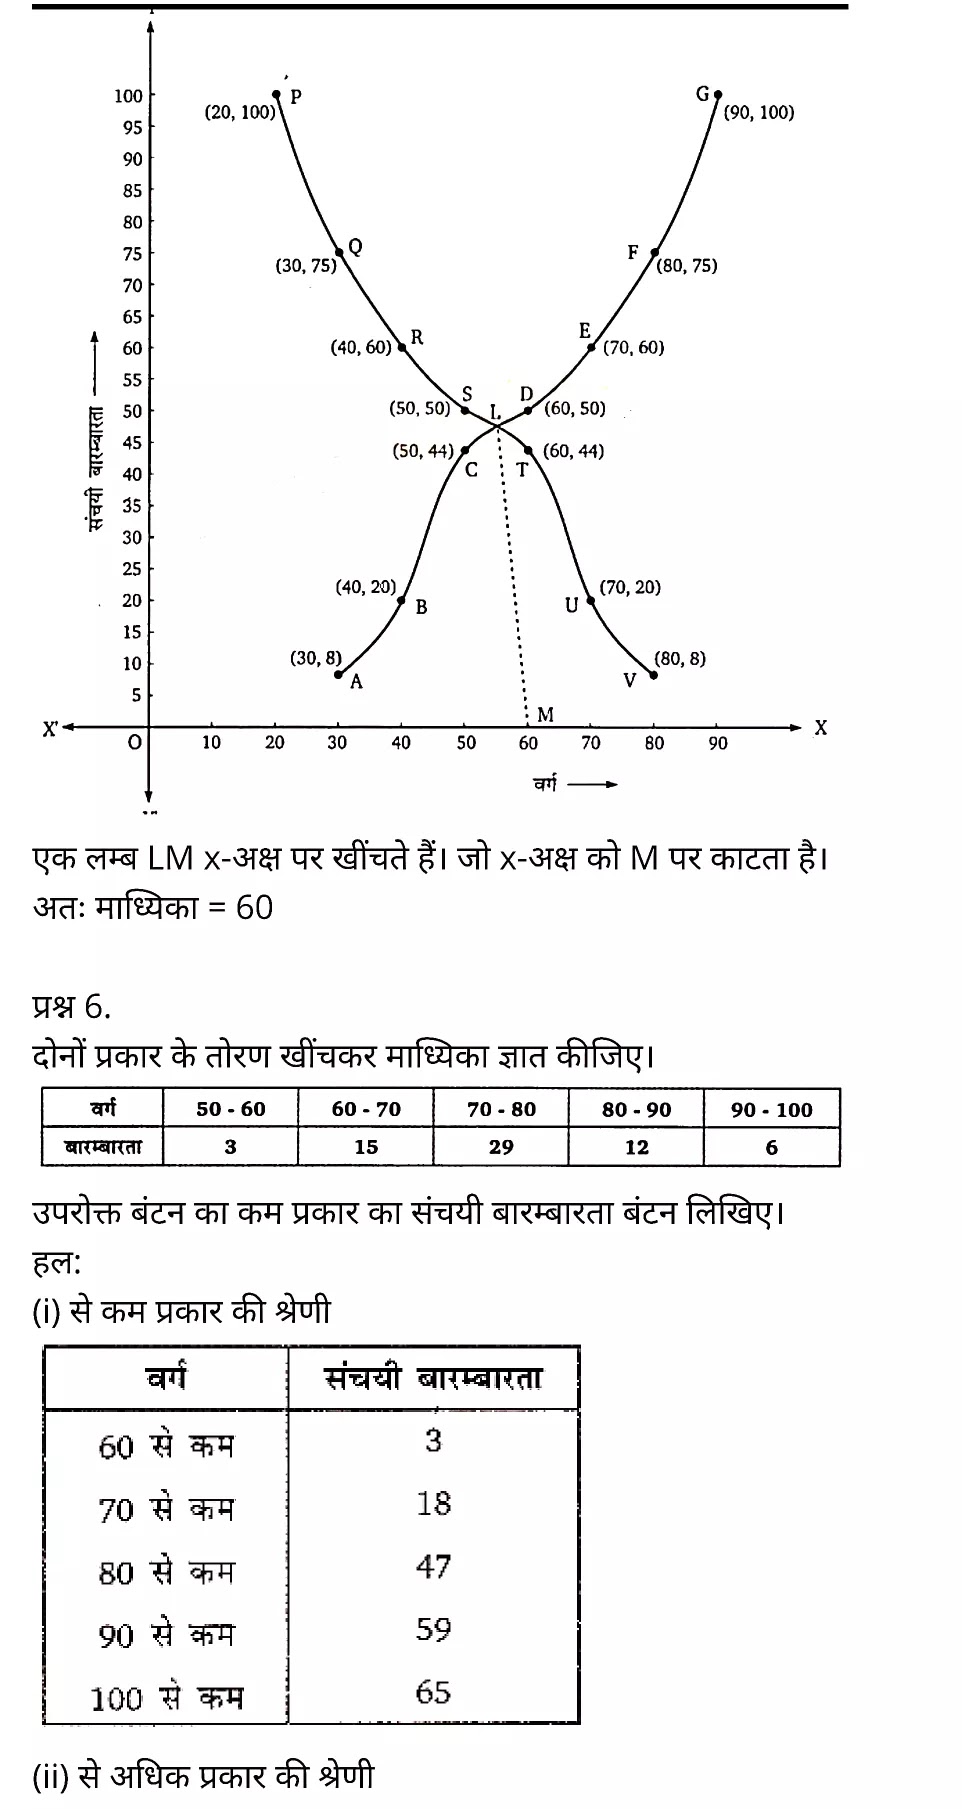 Chapter 14 Statistics Ex 14.1, Chapter 14 Statistics Ex 14.2, Chapter 14 Statistics Ex 14.3, Chapter 14 Statistics Ex 14.4, Chapter 14 Statistics Ex 14.5, Chapter 14 Statistics Ex 14.6, कक्षा 10 बालाजी गणित  के नोट्स  हिंदी में एनसीईआरटी समाधान,     class 10 Balaji Maths Chapter 14,   class 10 Balaji Maths Chapter 14 ncert solutions in Hindi,   class 10 Balaji Maths Chapter 14 notes in hindi,   class 10 Balaji Maths Chapter 14 question answer,   class 10 Balaji Maths Chapter 14 notes,   class 10 Balaji Maths Chapter 14 class 10 Balaji Maths Chapter 14 in  hindi,    class 10 Balaji Maths Chapter 14 important questions in  hindi,   class 10 Balaji Maths Chapter 14 notes in hindi,    class 10 Balaji Maths Chapter 14 test,   class 10 Balaji Maths Chapter 14 pdf,   class 10 Balaji Maths Chapter 14 notes pdf,   class 10 Balaji Maths Chapter 14 exercise solutions,   class 10 Balaji Maths Chapter 14 notes study rankers,   class 10 Balaji Maths Chapter 14 notes,    class 10 Balaji Maths Chapter 14  class 10  notes pdf,   class 10 Balaji Maths Chapter 14 class 10  notes  ncert,   class 10 Balaji Maths Chapter 14 class 10 pdf,   class 10 Balaji Maths Chapter 14  book,   class 10 Balaji Maths Chapter 14 quiz class 10  ,    10  th class 10 Balaji Maths Chapter 14  book up board,   up board 10  th class 10 Balaji Maths Chapter 14 notes,  class 10 Balaji Maths,   class 10 Balaji Maths ncert solutions in Hindi,   class 10 Balaji Maths notes in hindi,   class 10 Balaji Maths question answer,   class 10 Balaji Maths notes,  class 10 Balaji Maths class 10 Balaji Maths Chapter 14 in  hindi,    class 10 Balaji Maths important questions in  hindi,   class 10 Balaji Maths notes in hindi,    class 10 Balaji Maths test,  class 10 Balaji Maths class 10 Balaji Maths Chapter 14 pdf,   class 10 Balaji Maths notes pdf,   class 10 Balaji Maths exercise solutions,   class 10 Balaji Maths,  class 10 Balaji Maths notes study rankers,   class 10 Balaji Maths notes,  class 10 Balaji Maths notes,   class 10 Balaji Maths  class 10  notes pdf,   class 10 Balaji Maths class 10  notes  ncert,   class 10 Balaji Maths class 10 pdf,   class 10 Balaji Maths  book,  class 10 Balaji Maths quiz class 10  ,  10  th class 10 Balaji Maths    book up board,    up board 10  th class 10 Balaji Maths notes,      कक्षा 10 बालाजी गणित अध्याय 14 ,  कक्षा 10 बालाजी गणित, कक्षा 10 बालाजी गणित अध्याय 14  के नोट्स हिंदी में,  कक्षा 10 का हिंदी अध्याय 14 का प्रश्न उत्तर,  कक्षा 10 बालाजी गणित अध्याय 14  के नोट्स,  10 कक्षा बालाजी गणित  हिंदी में, कक्षा 10 बालाजी गणित अध्याय 14  हिंदी में,  कक्षा 10 बालाजी गणित अध्याय 14  महत्वपूर्ण प्रश्न हिंदी में, कक्षा 10   हिंदी के नोट्स  हिंदी में, बालाजी गणित हिंदी में  कक्षा 10 नोट्स pdf,    बालाजी गणित हिंदी में  कक्षा 10 नोट्स 2021 ncert,   बालाजी गणित हिंदी  कक्षा 10 pdf,   बालाजी गणित हिंदी में  पुस्तक,   बालाजी गणित हिंदी में की बुक,   बालाजी गणित हिंदी में  प्रश्नोत्तरी class 10 ,  बिहार बोर्ड 10  पुस्तक वीं हिंदी नोट्स,    बालाजी गणित कक्षा 10 नोट्स 2021 ncert,   बालाजी गणित  कक्षा 10 pdf,   बालाजी गणित  पुस्तक,   बालाजी गणित  प्रश्नोत्तरी class 10, कक्षा 10 बालाजी गणित,  कक्षा 10 बालाजी गणित  के नोट्स हिंदी में,  कक्षा 10 का हिंदी का प्रश्न उत्तर,  कक्षा 10 बालाजी गणित  के नोट्स,  10 कक्षा हिंदी 2021  हिंदी में, कक्षा 10 बालाजी गणित  हिंदी में,  कक्षा 10 बालाजी गणित  महत्वपूर्ण प्रश्न हिंदी में, कक्षा 10 बालाजी गणित  नोट्स  हिंदी में,